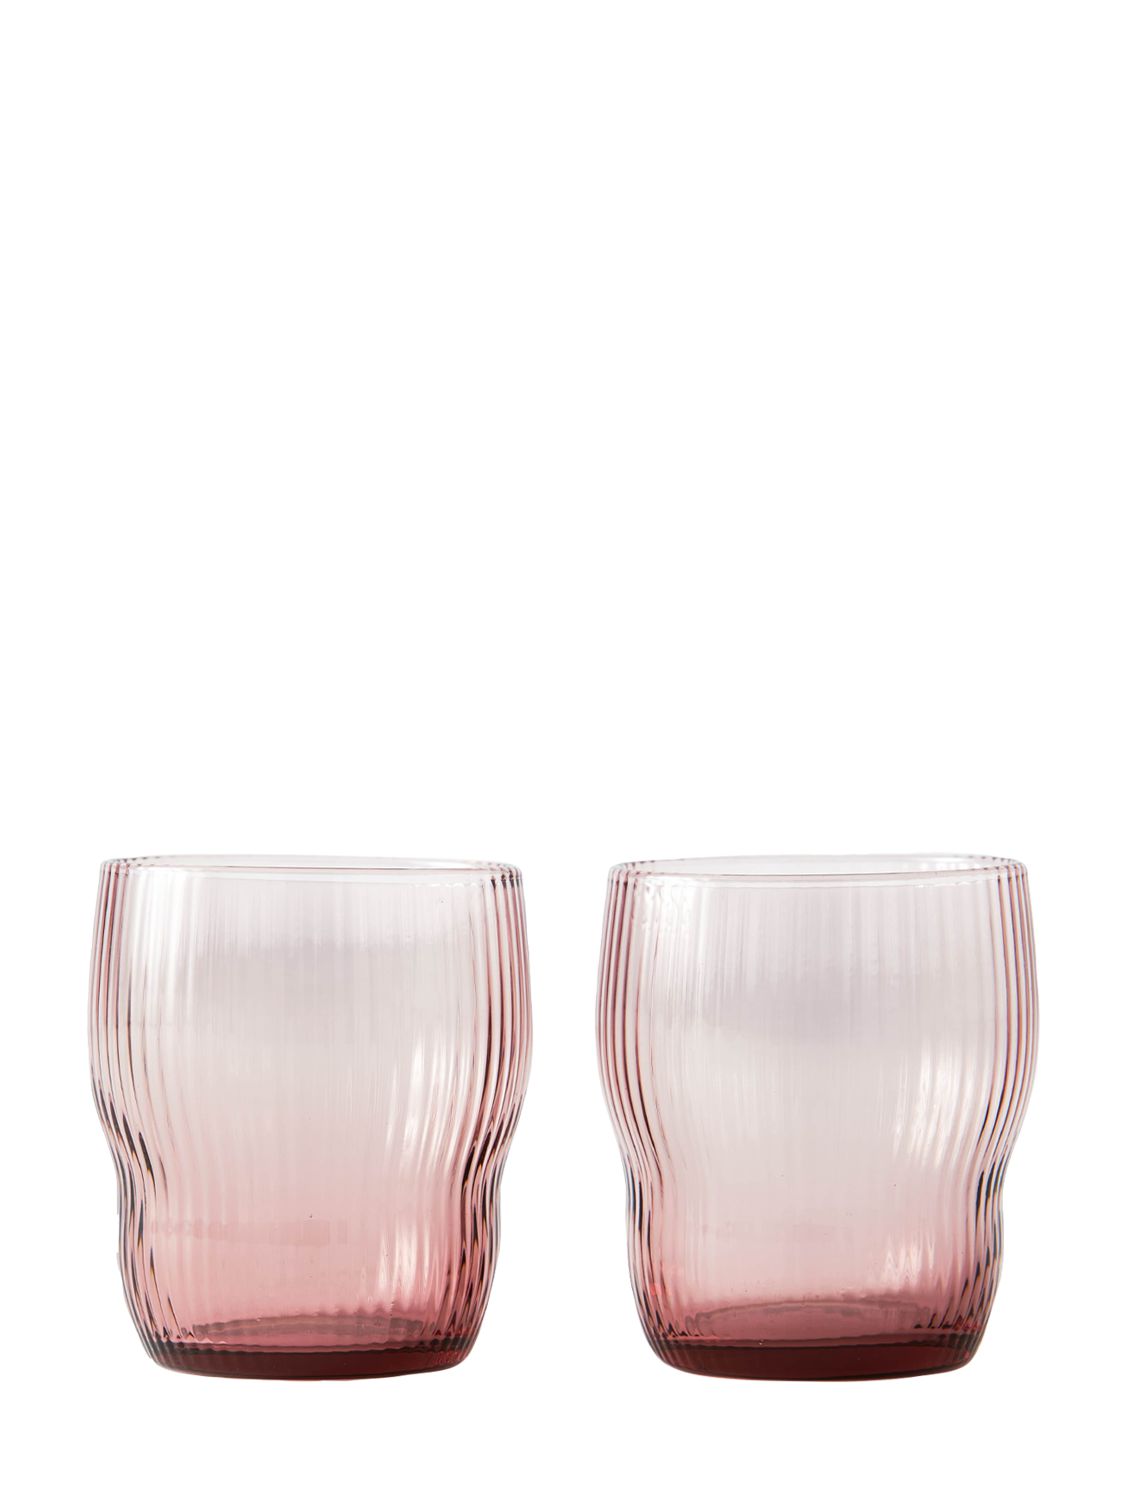 Polspotten Pum玻璃杯2个套装 In Pink